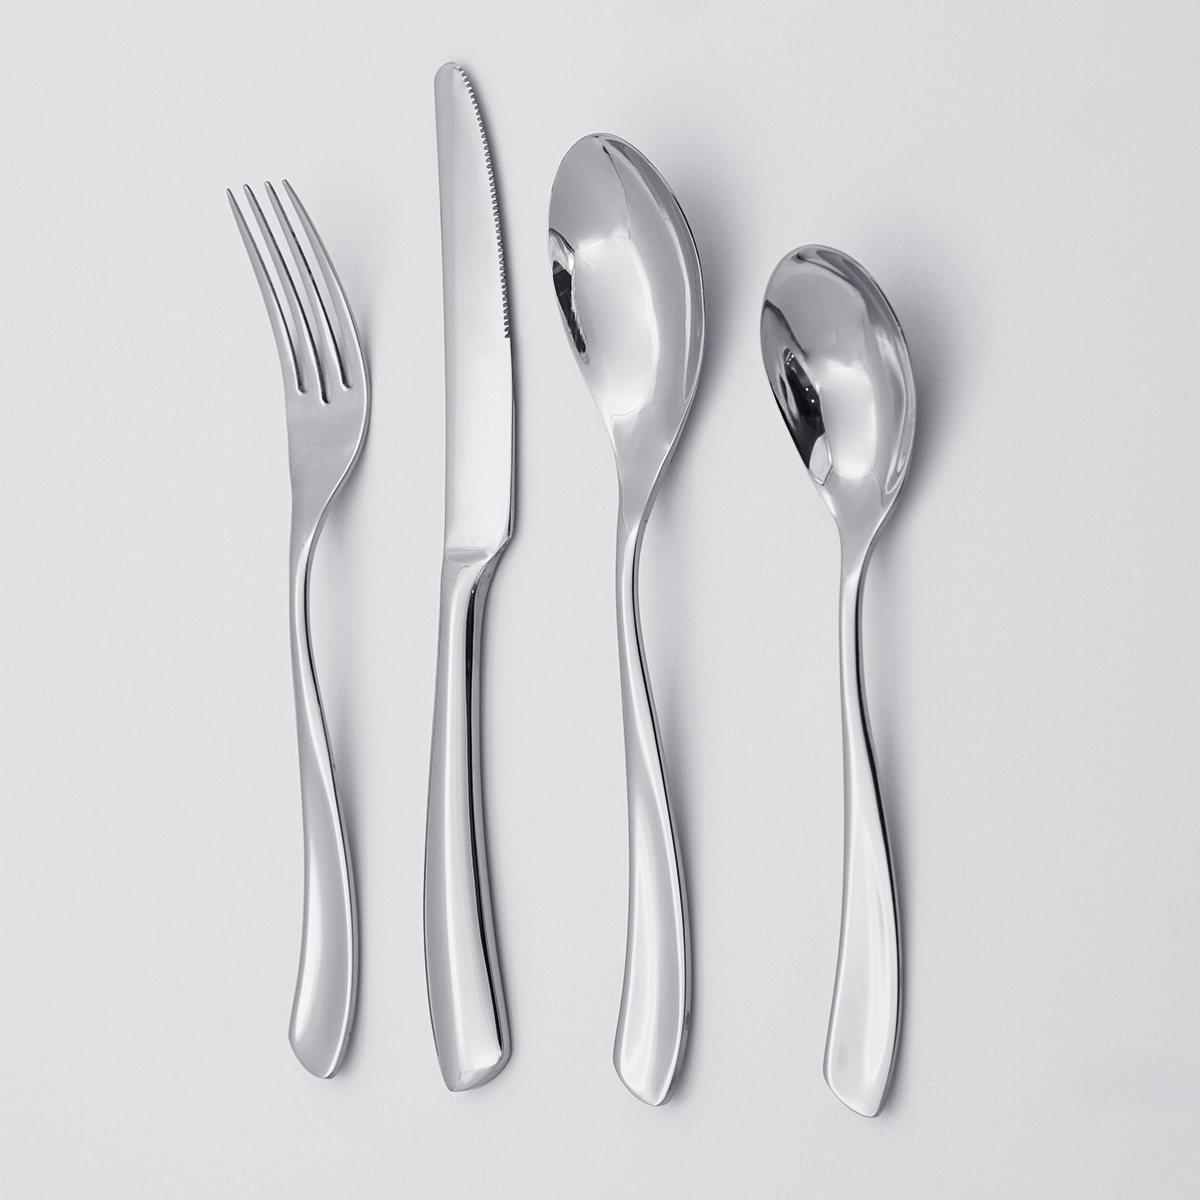 Unique Design Creative Cutlery 304 Stainless Steel Silverware Flatware Sets for Restaurant